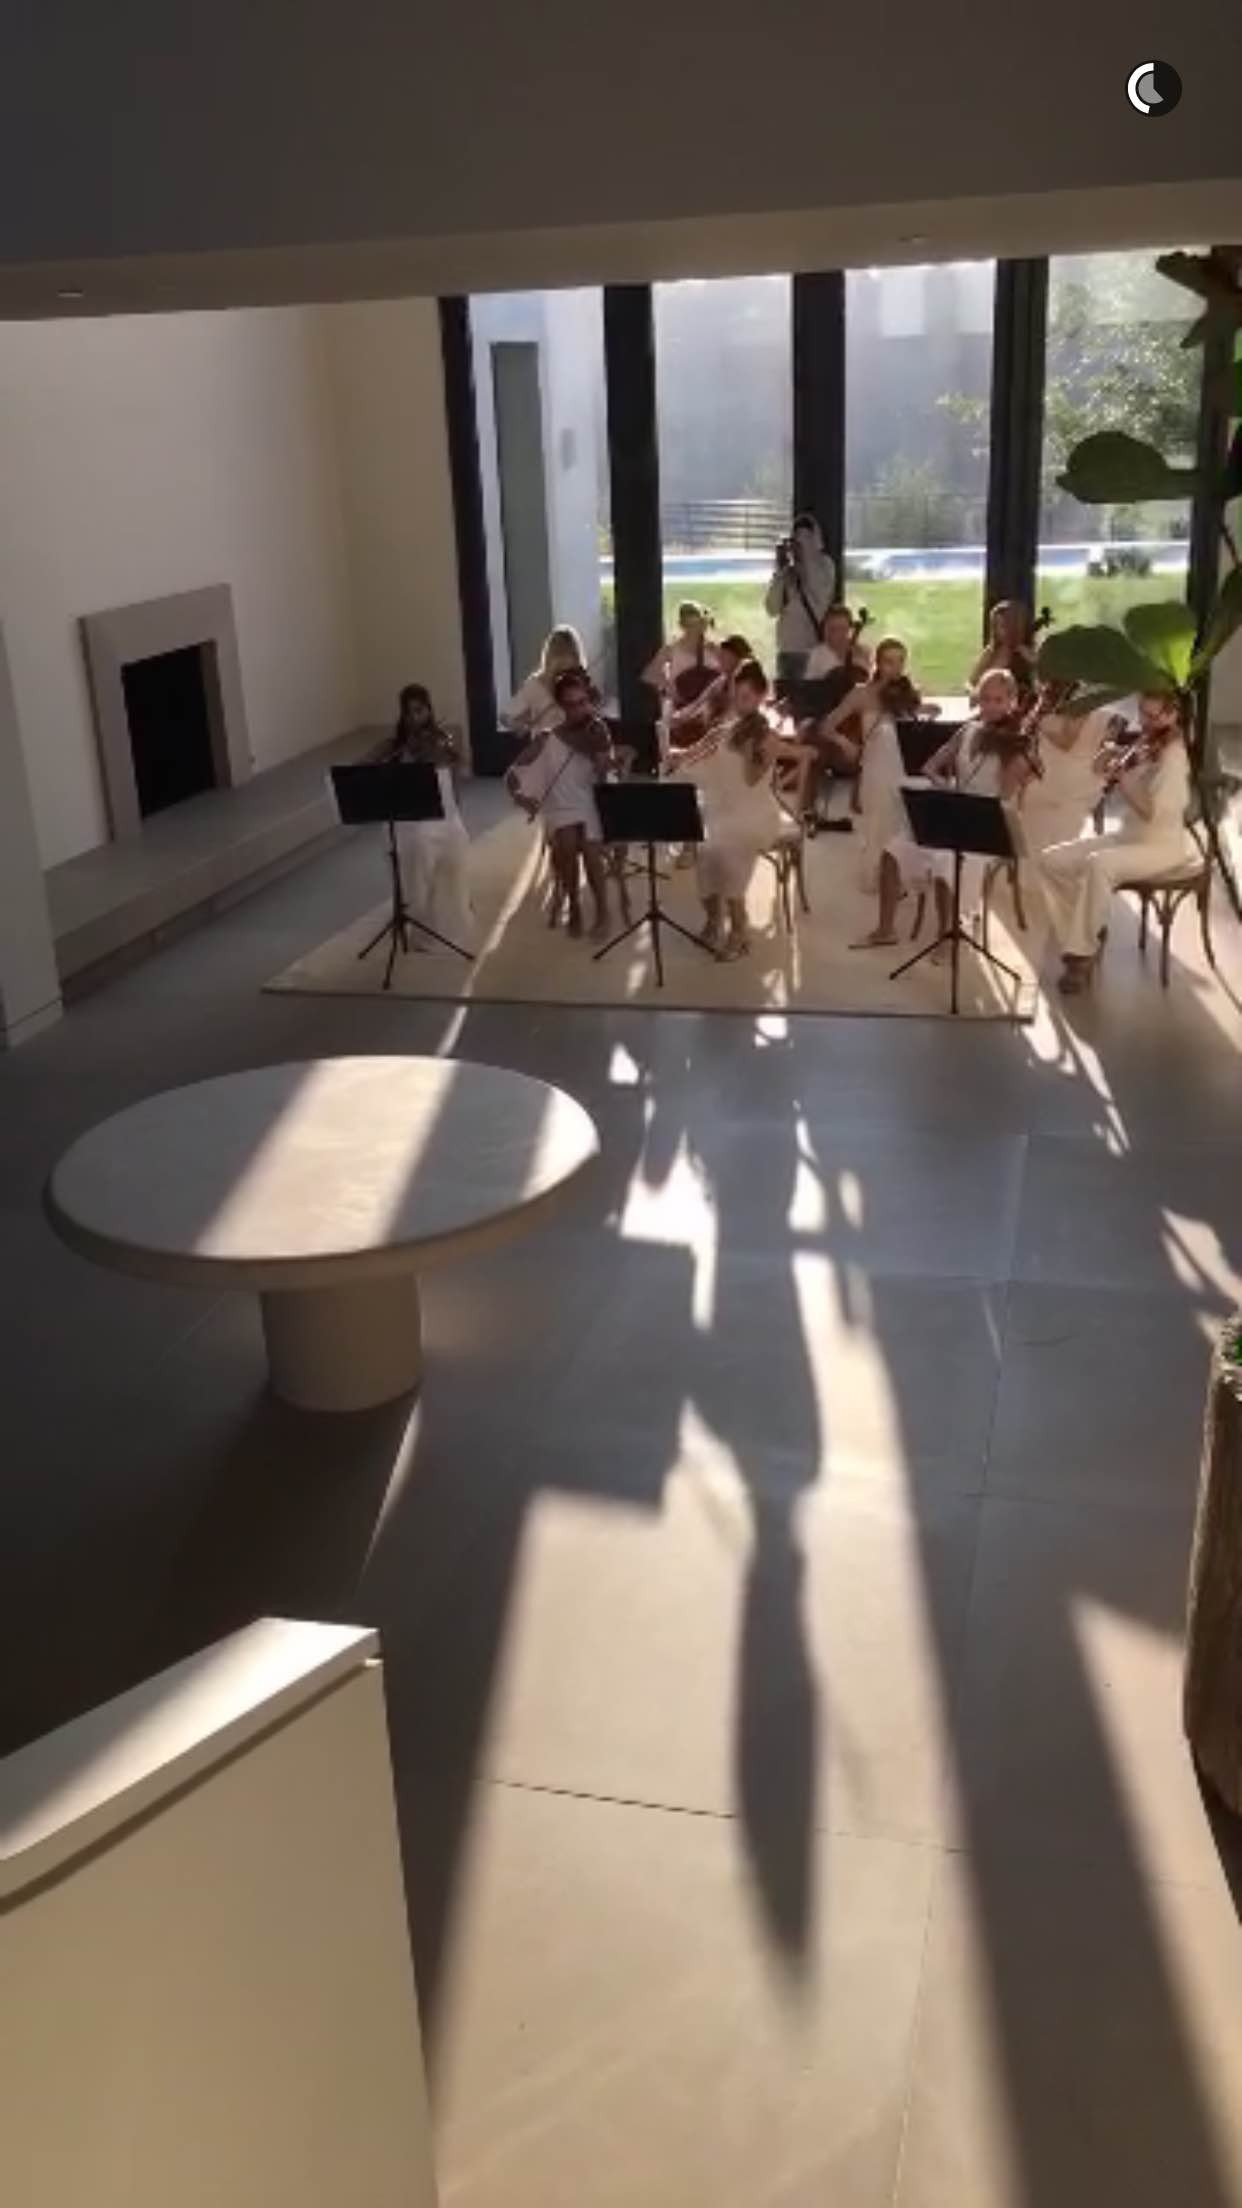 A orquestra (Foto: Reprodução/Snapchat)